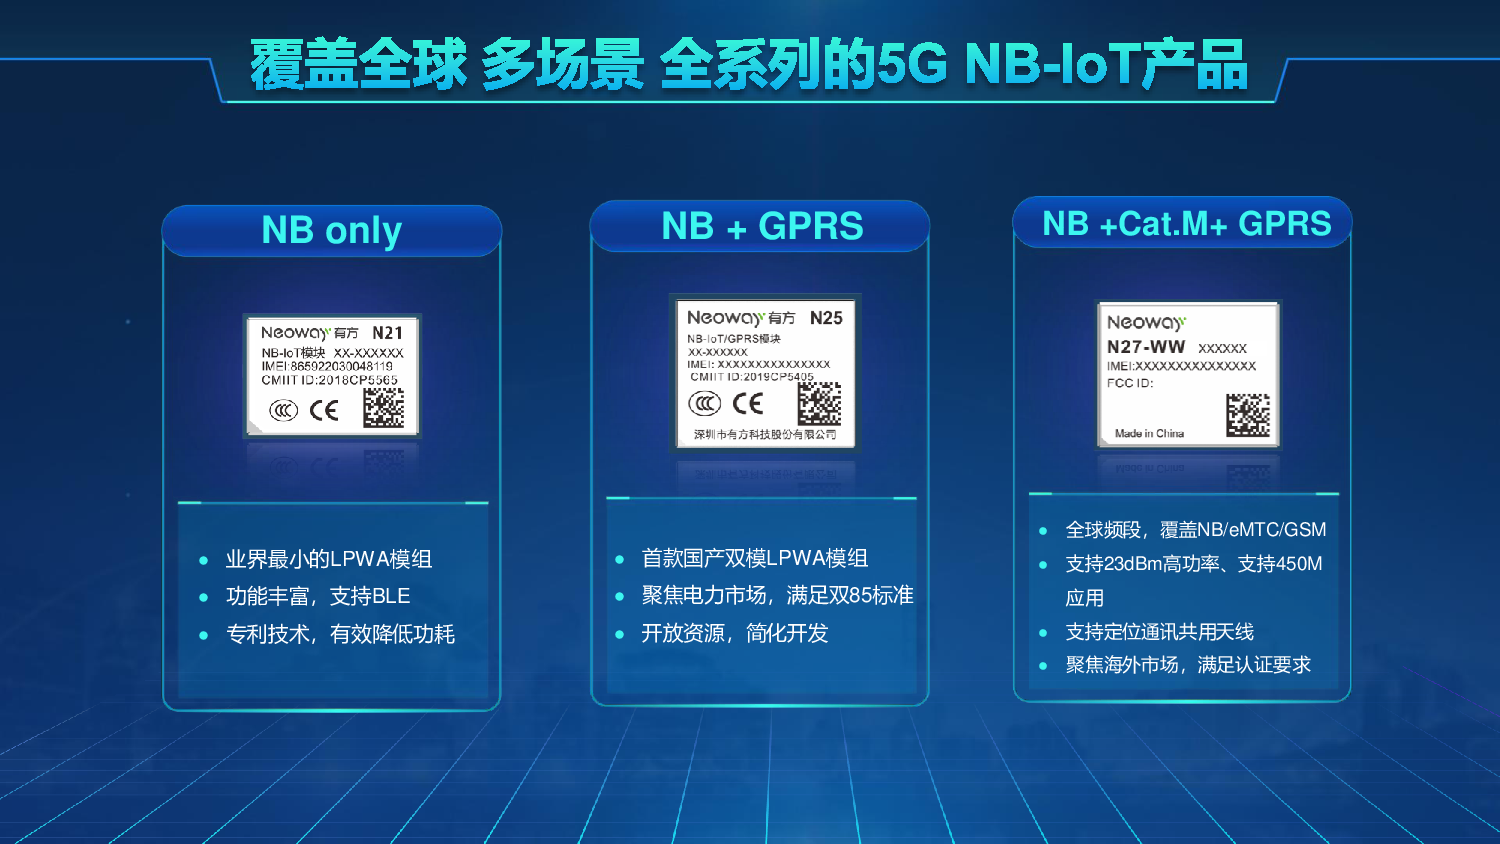 NB-IoT 新变化 新前景-罗伟【2020大湾区物联网创新技术及应用大会PPT】图片